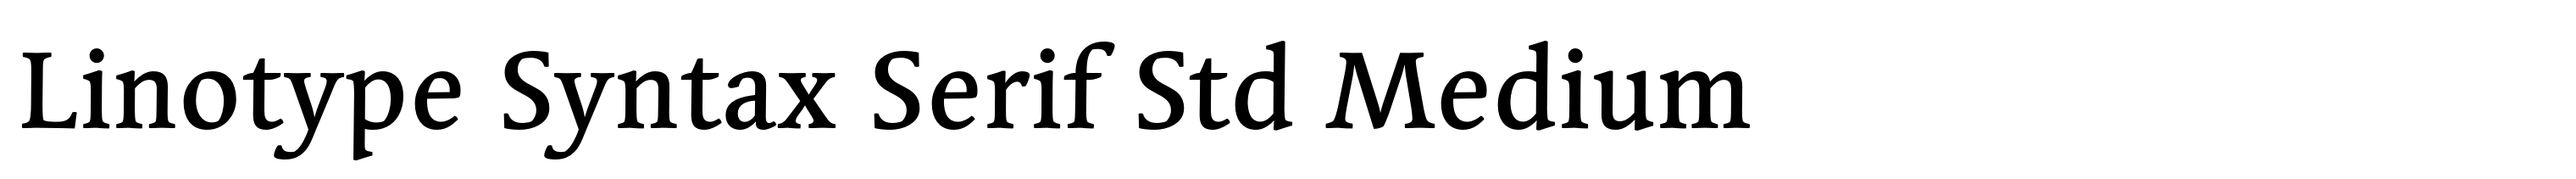 Linotype Syntax Serif Std Medium